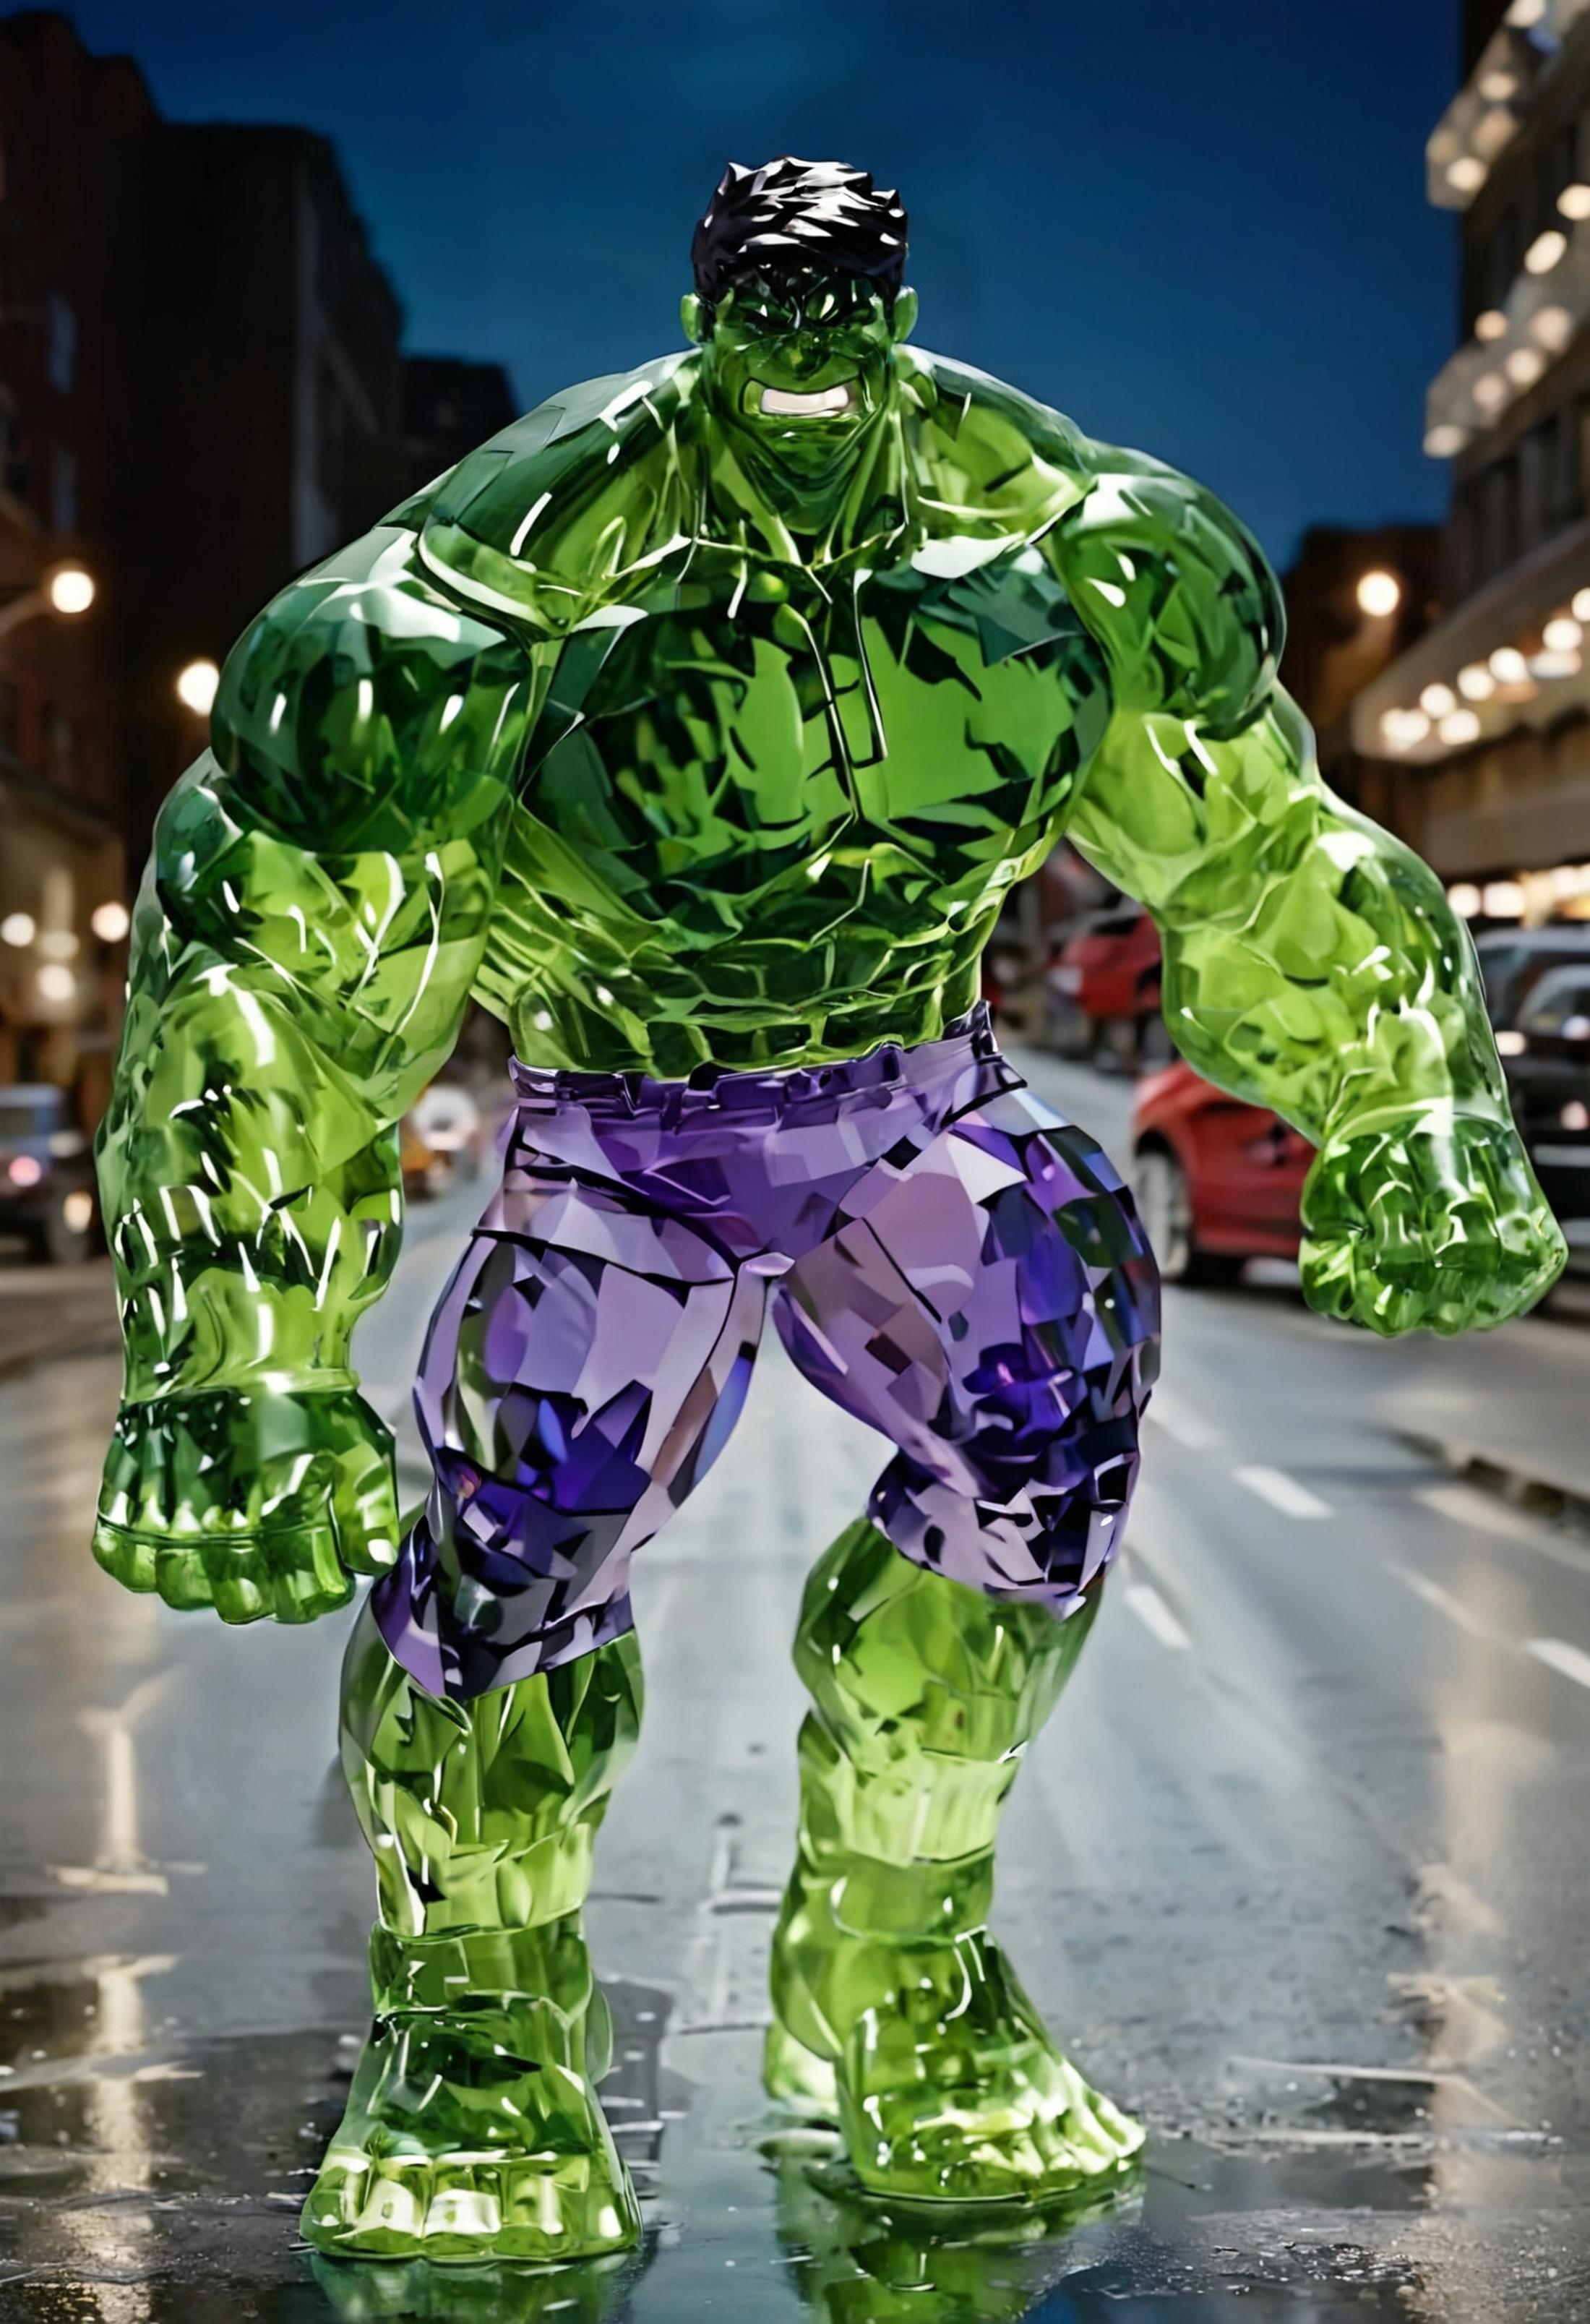 A green and purple Hulk statue on a street.